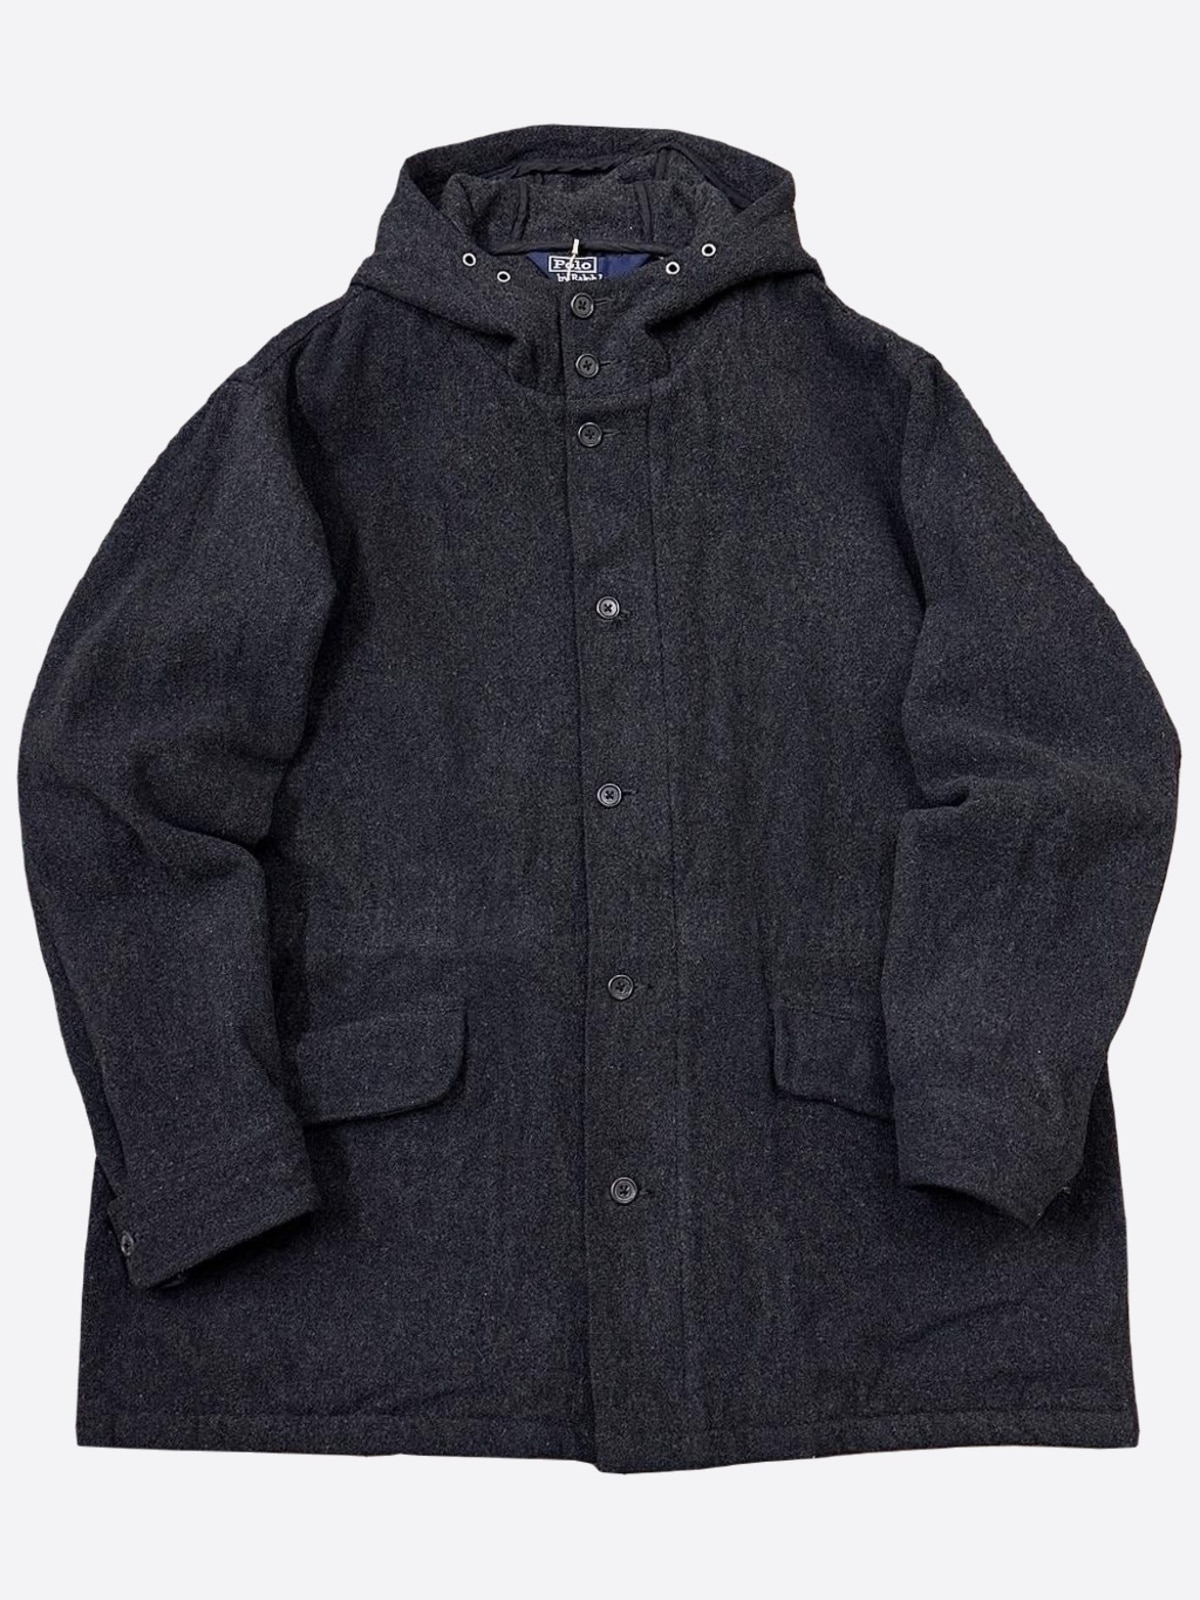 Charcoal Wool Hood Coat (110size)